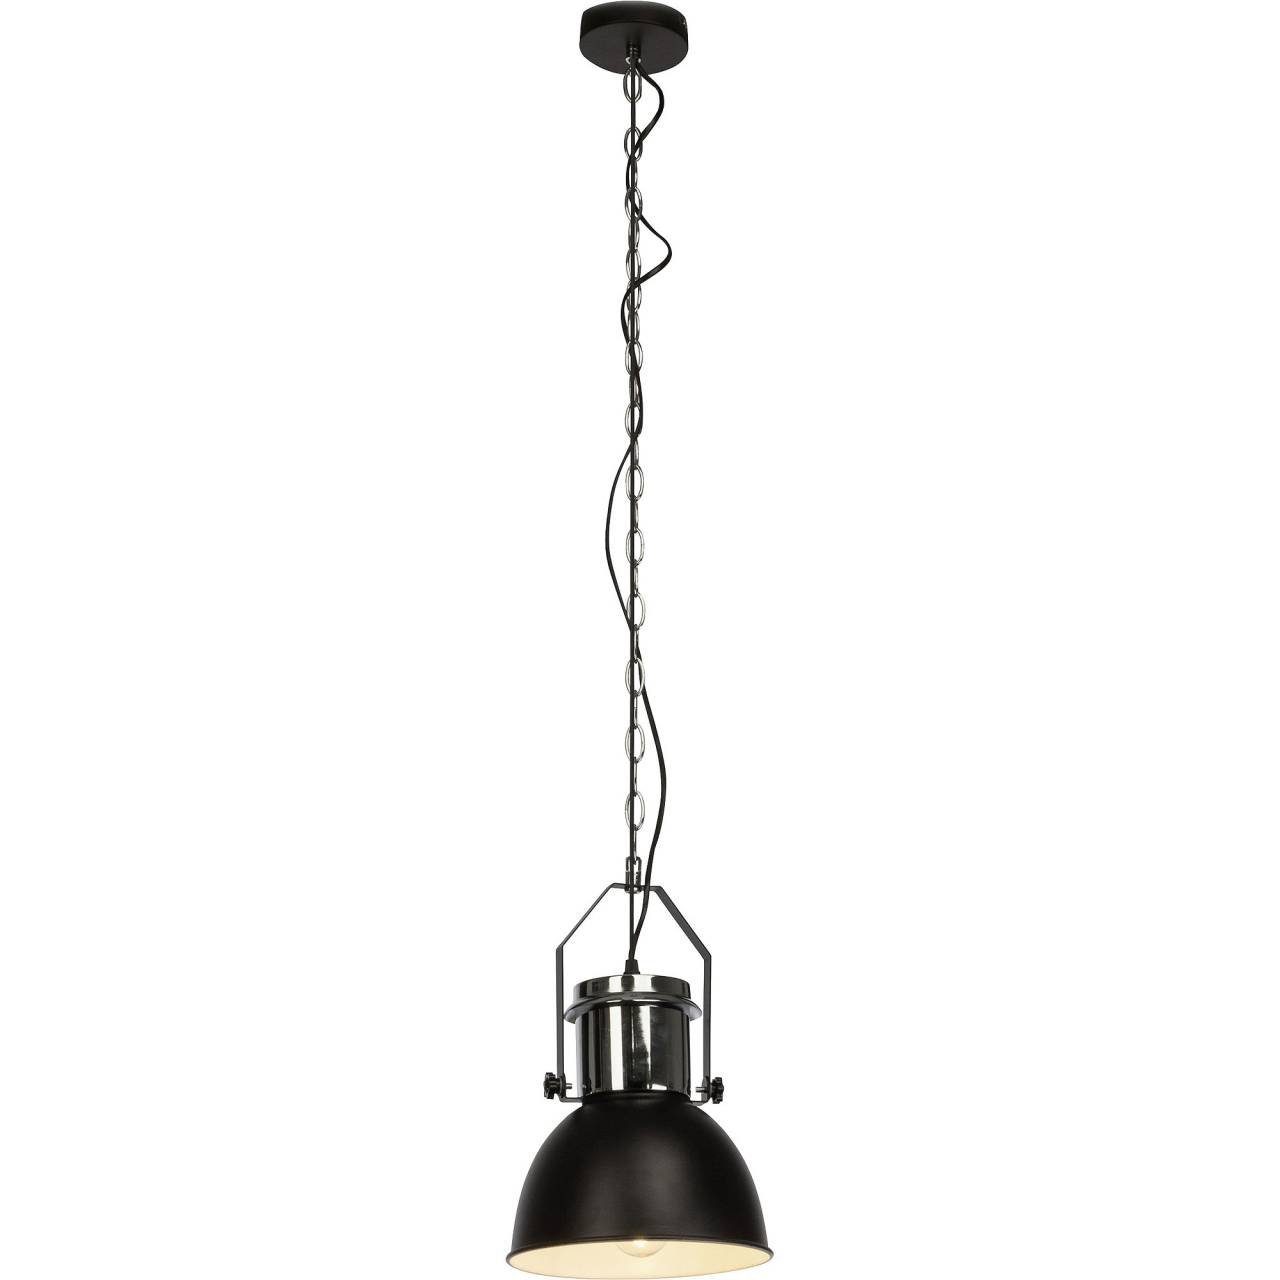 60W, Salford, A60, Salford Pendelleuchte Lampe E27, schwarz/chrom 23cm Brilliant gee Pendelleuchte 1x